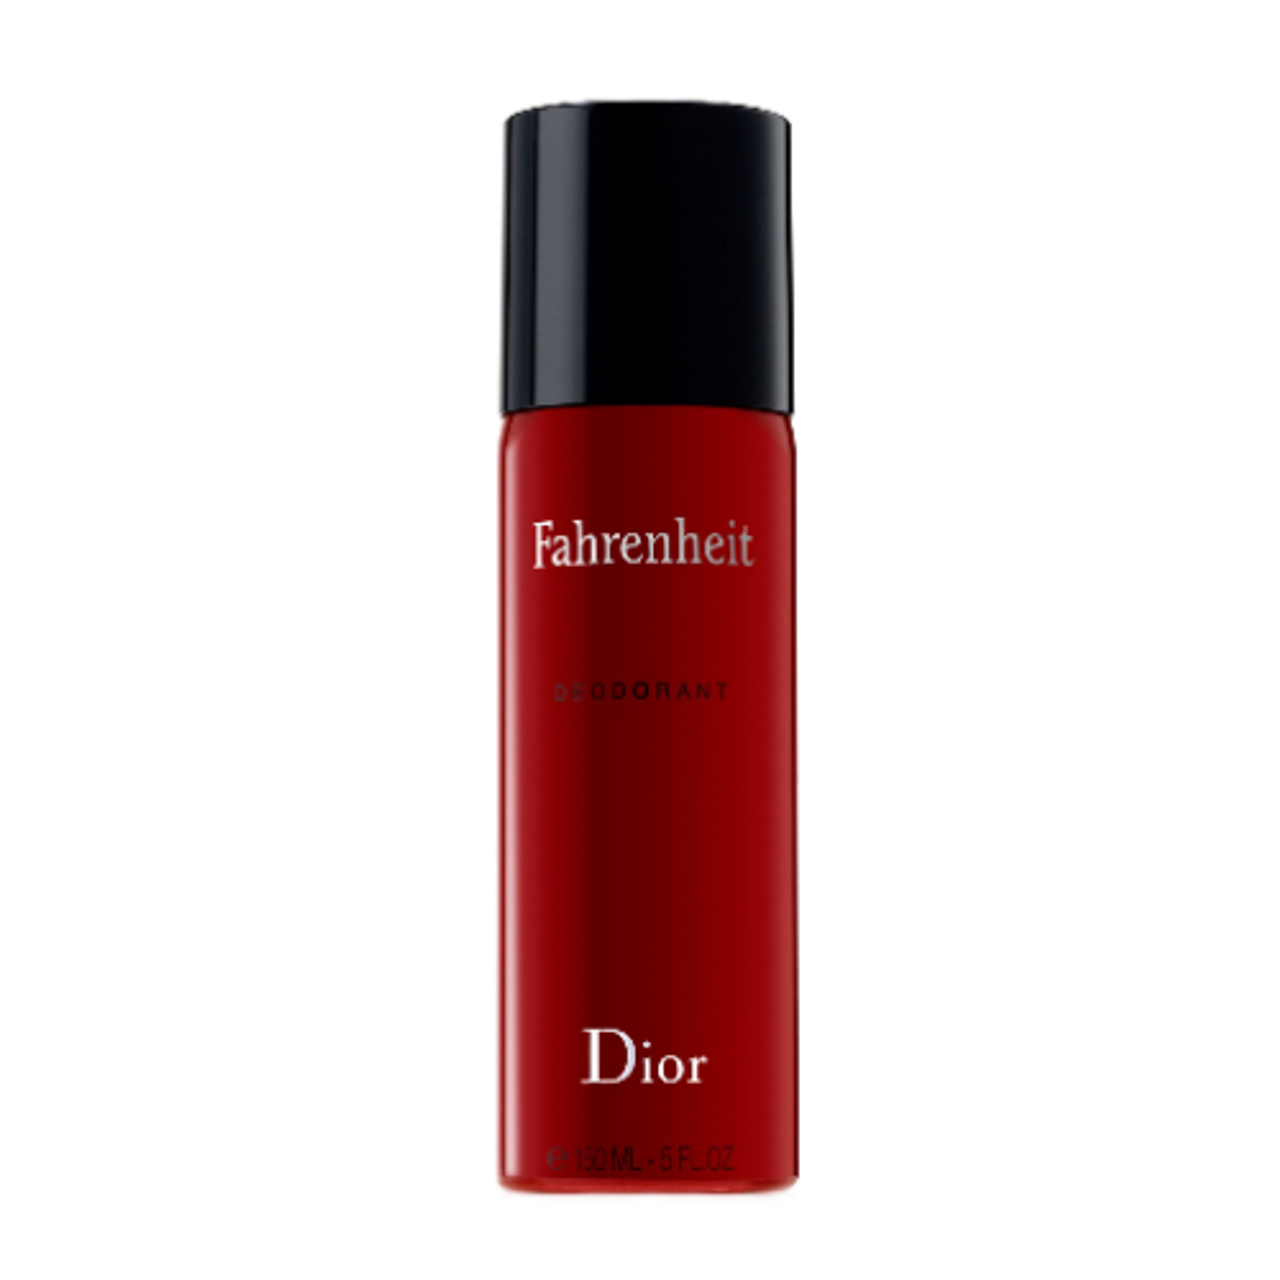 Rand noodzaak trog Fahrenheit by Christian Dior 5 oz Deodorant Spray for Men - ForeverLux